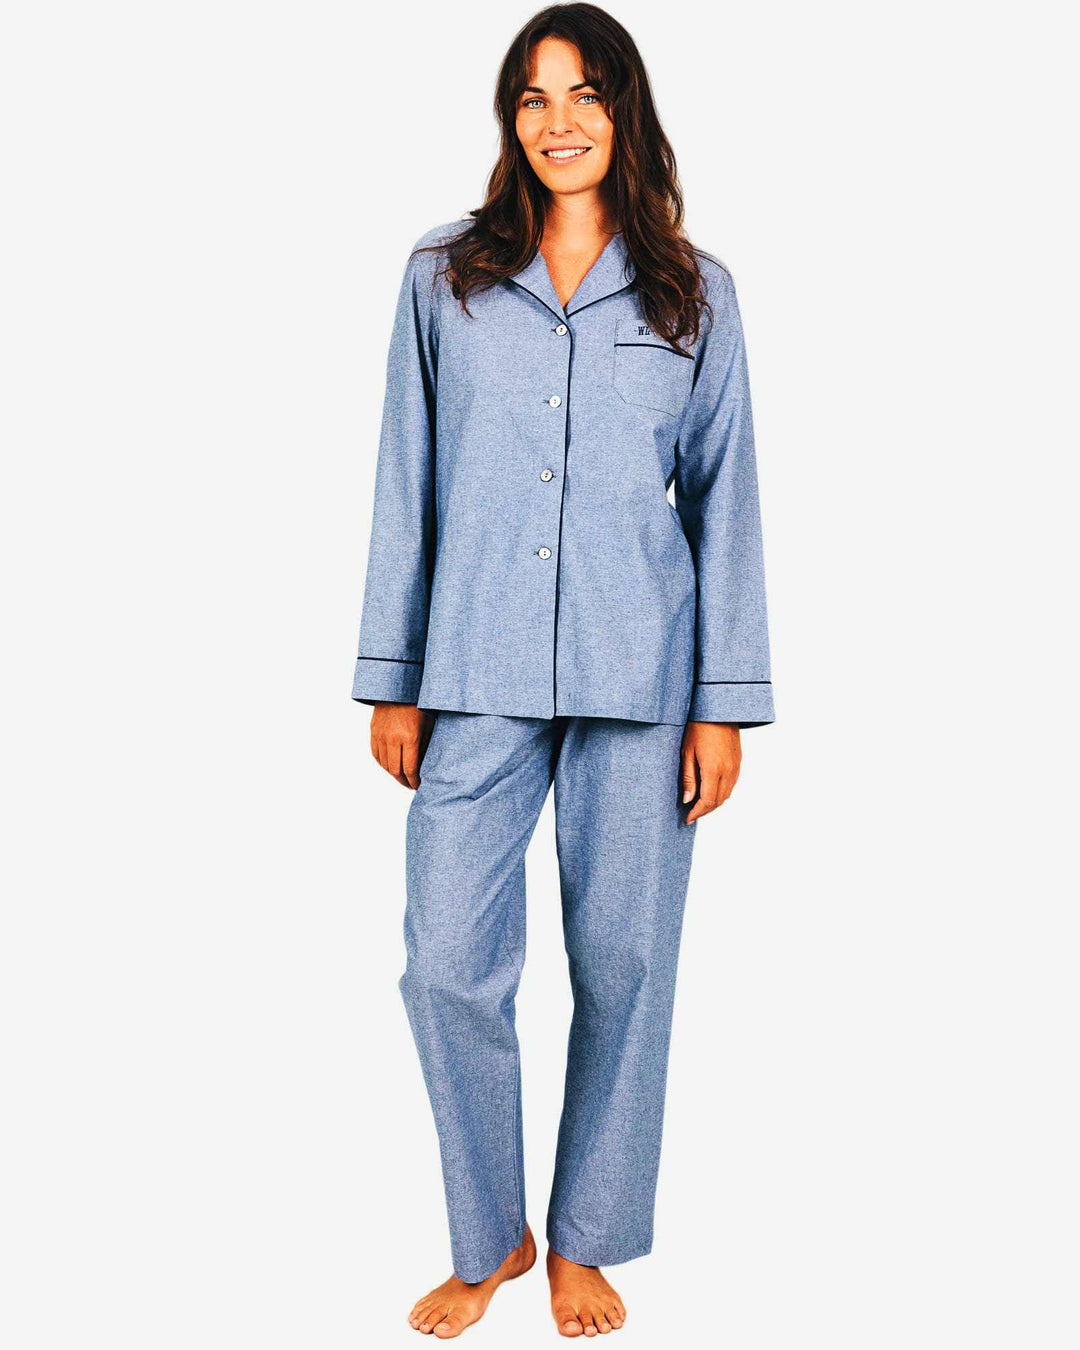 Womens cotton pyjamas set - Chambray indigo